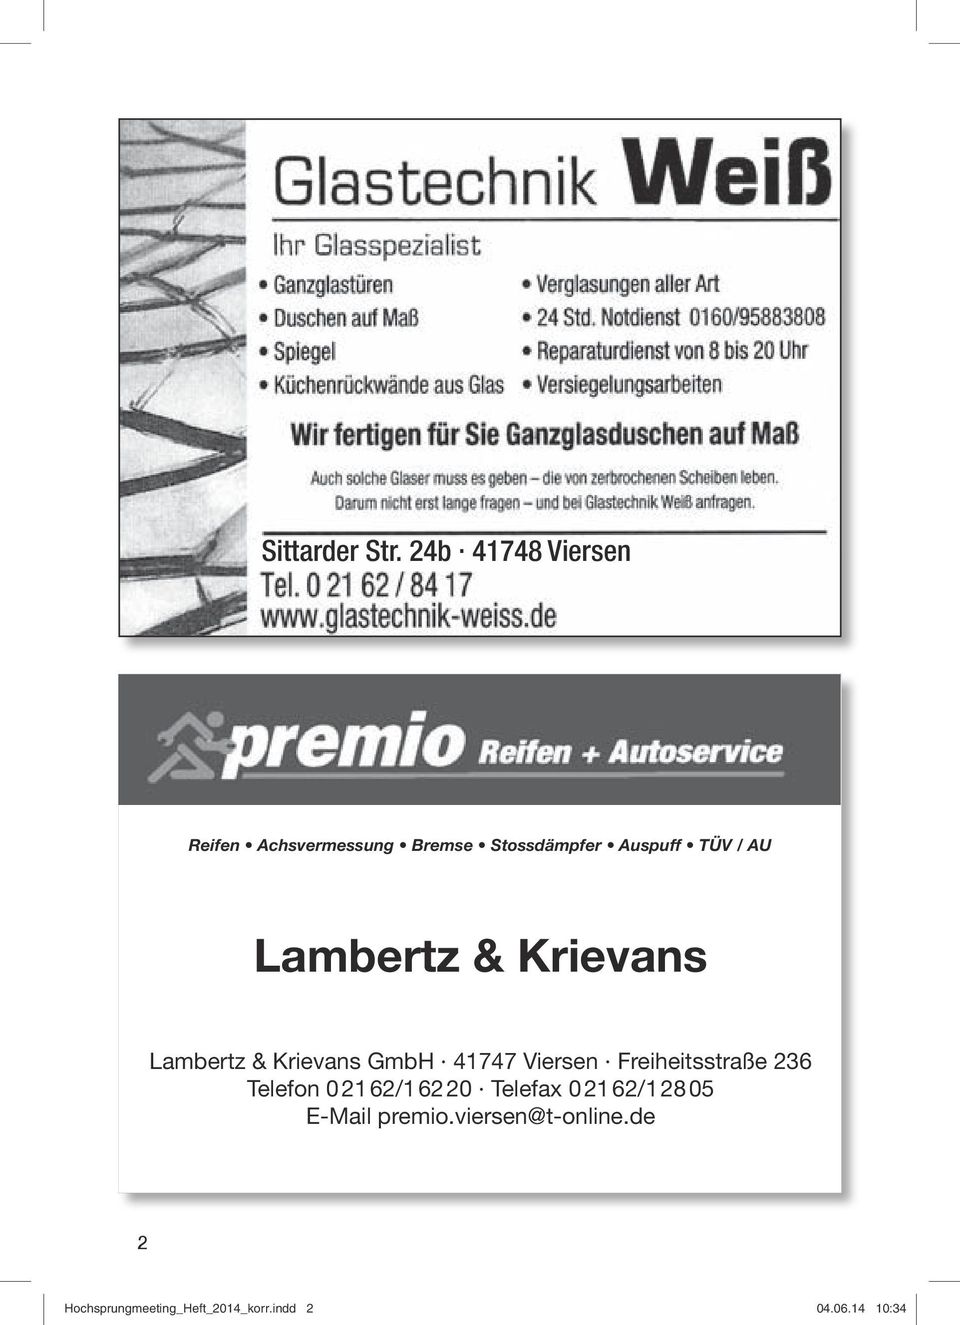 Lambertz & Krievans Lambertz & Krievans GmbH 41747 Viersen Freiheitsstraße